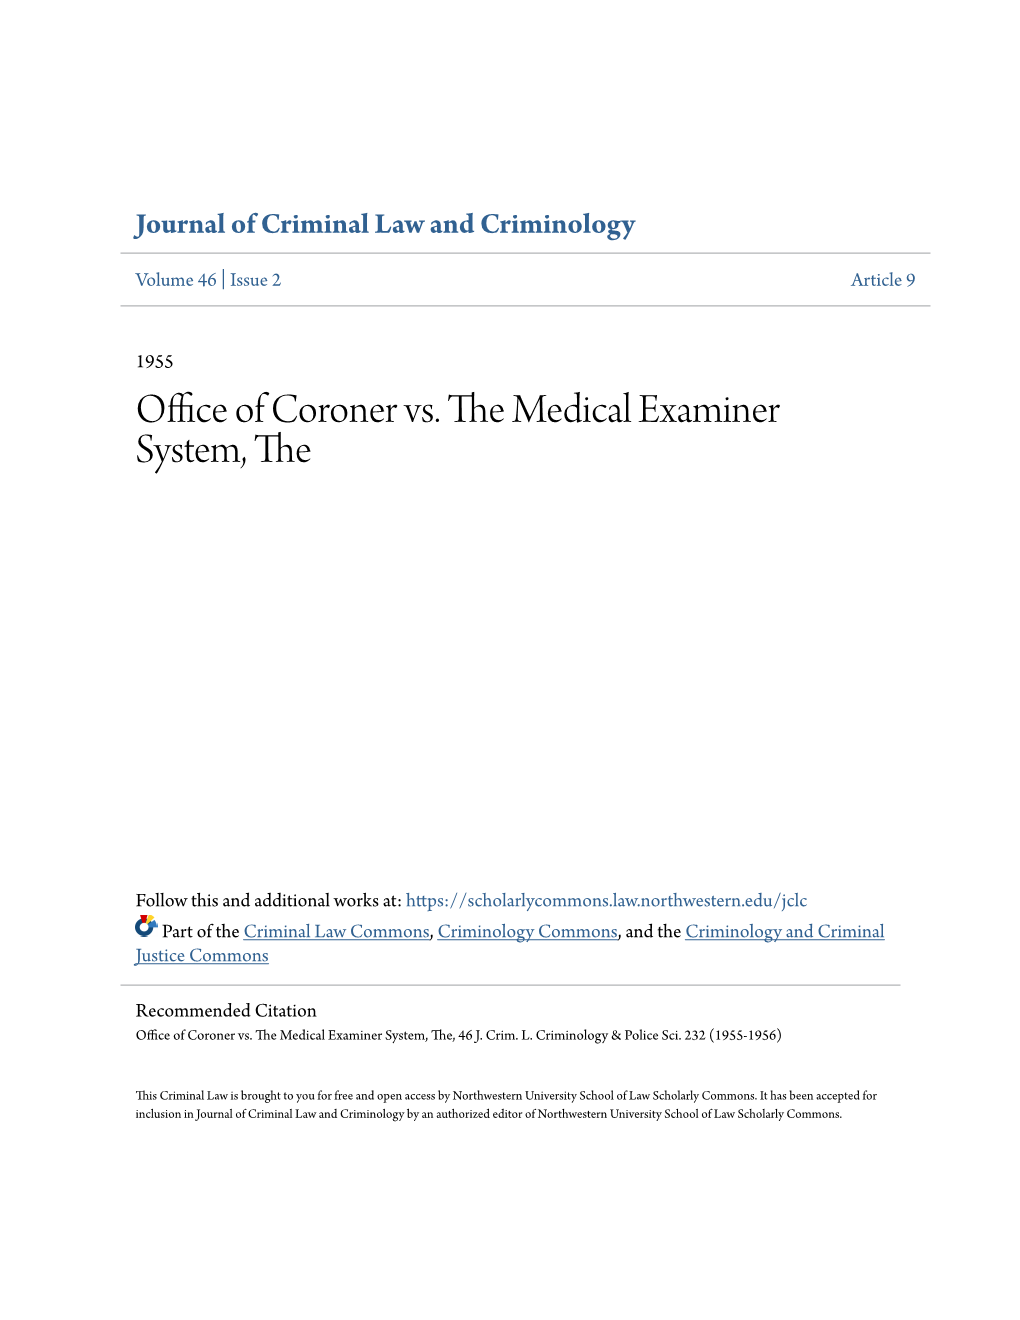 Office of Coroner Vs. the Medical Examiner System